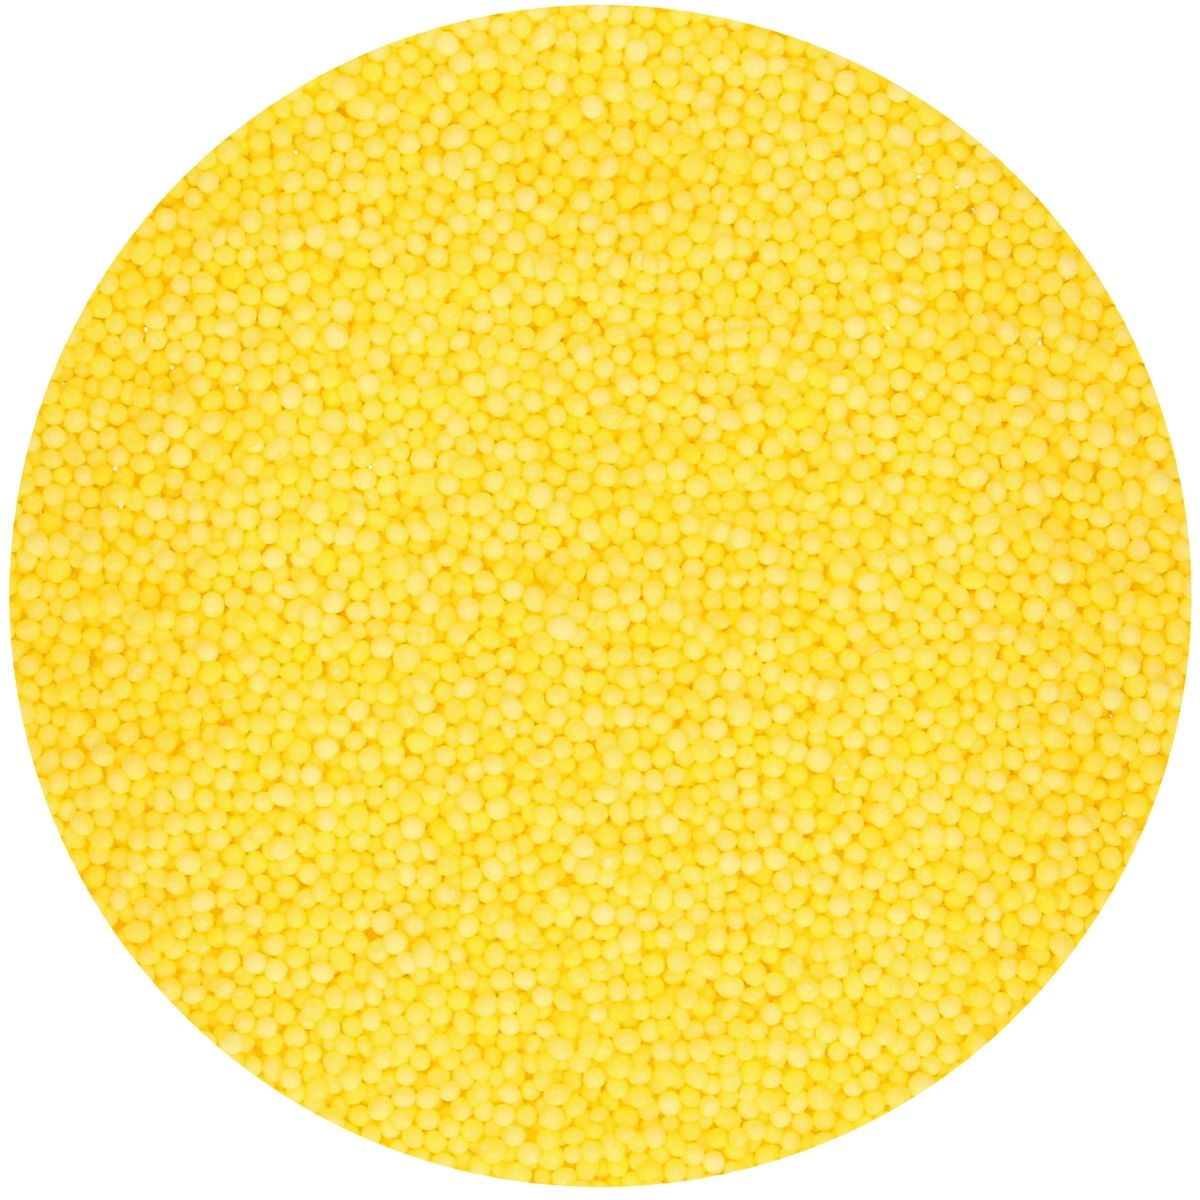 Imagen de producto: Non pareils amarillos, 80 g - Funcakes